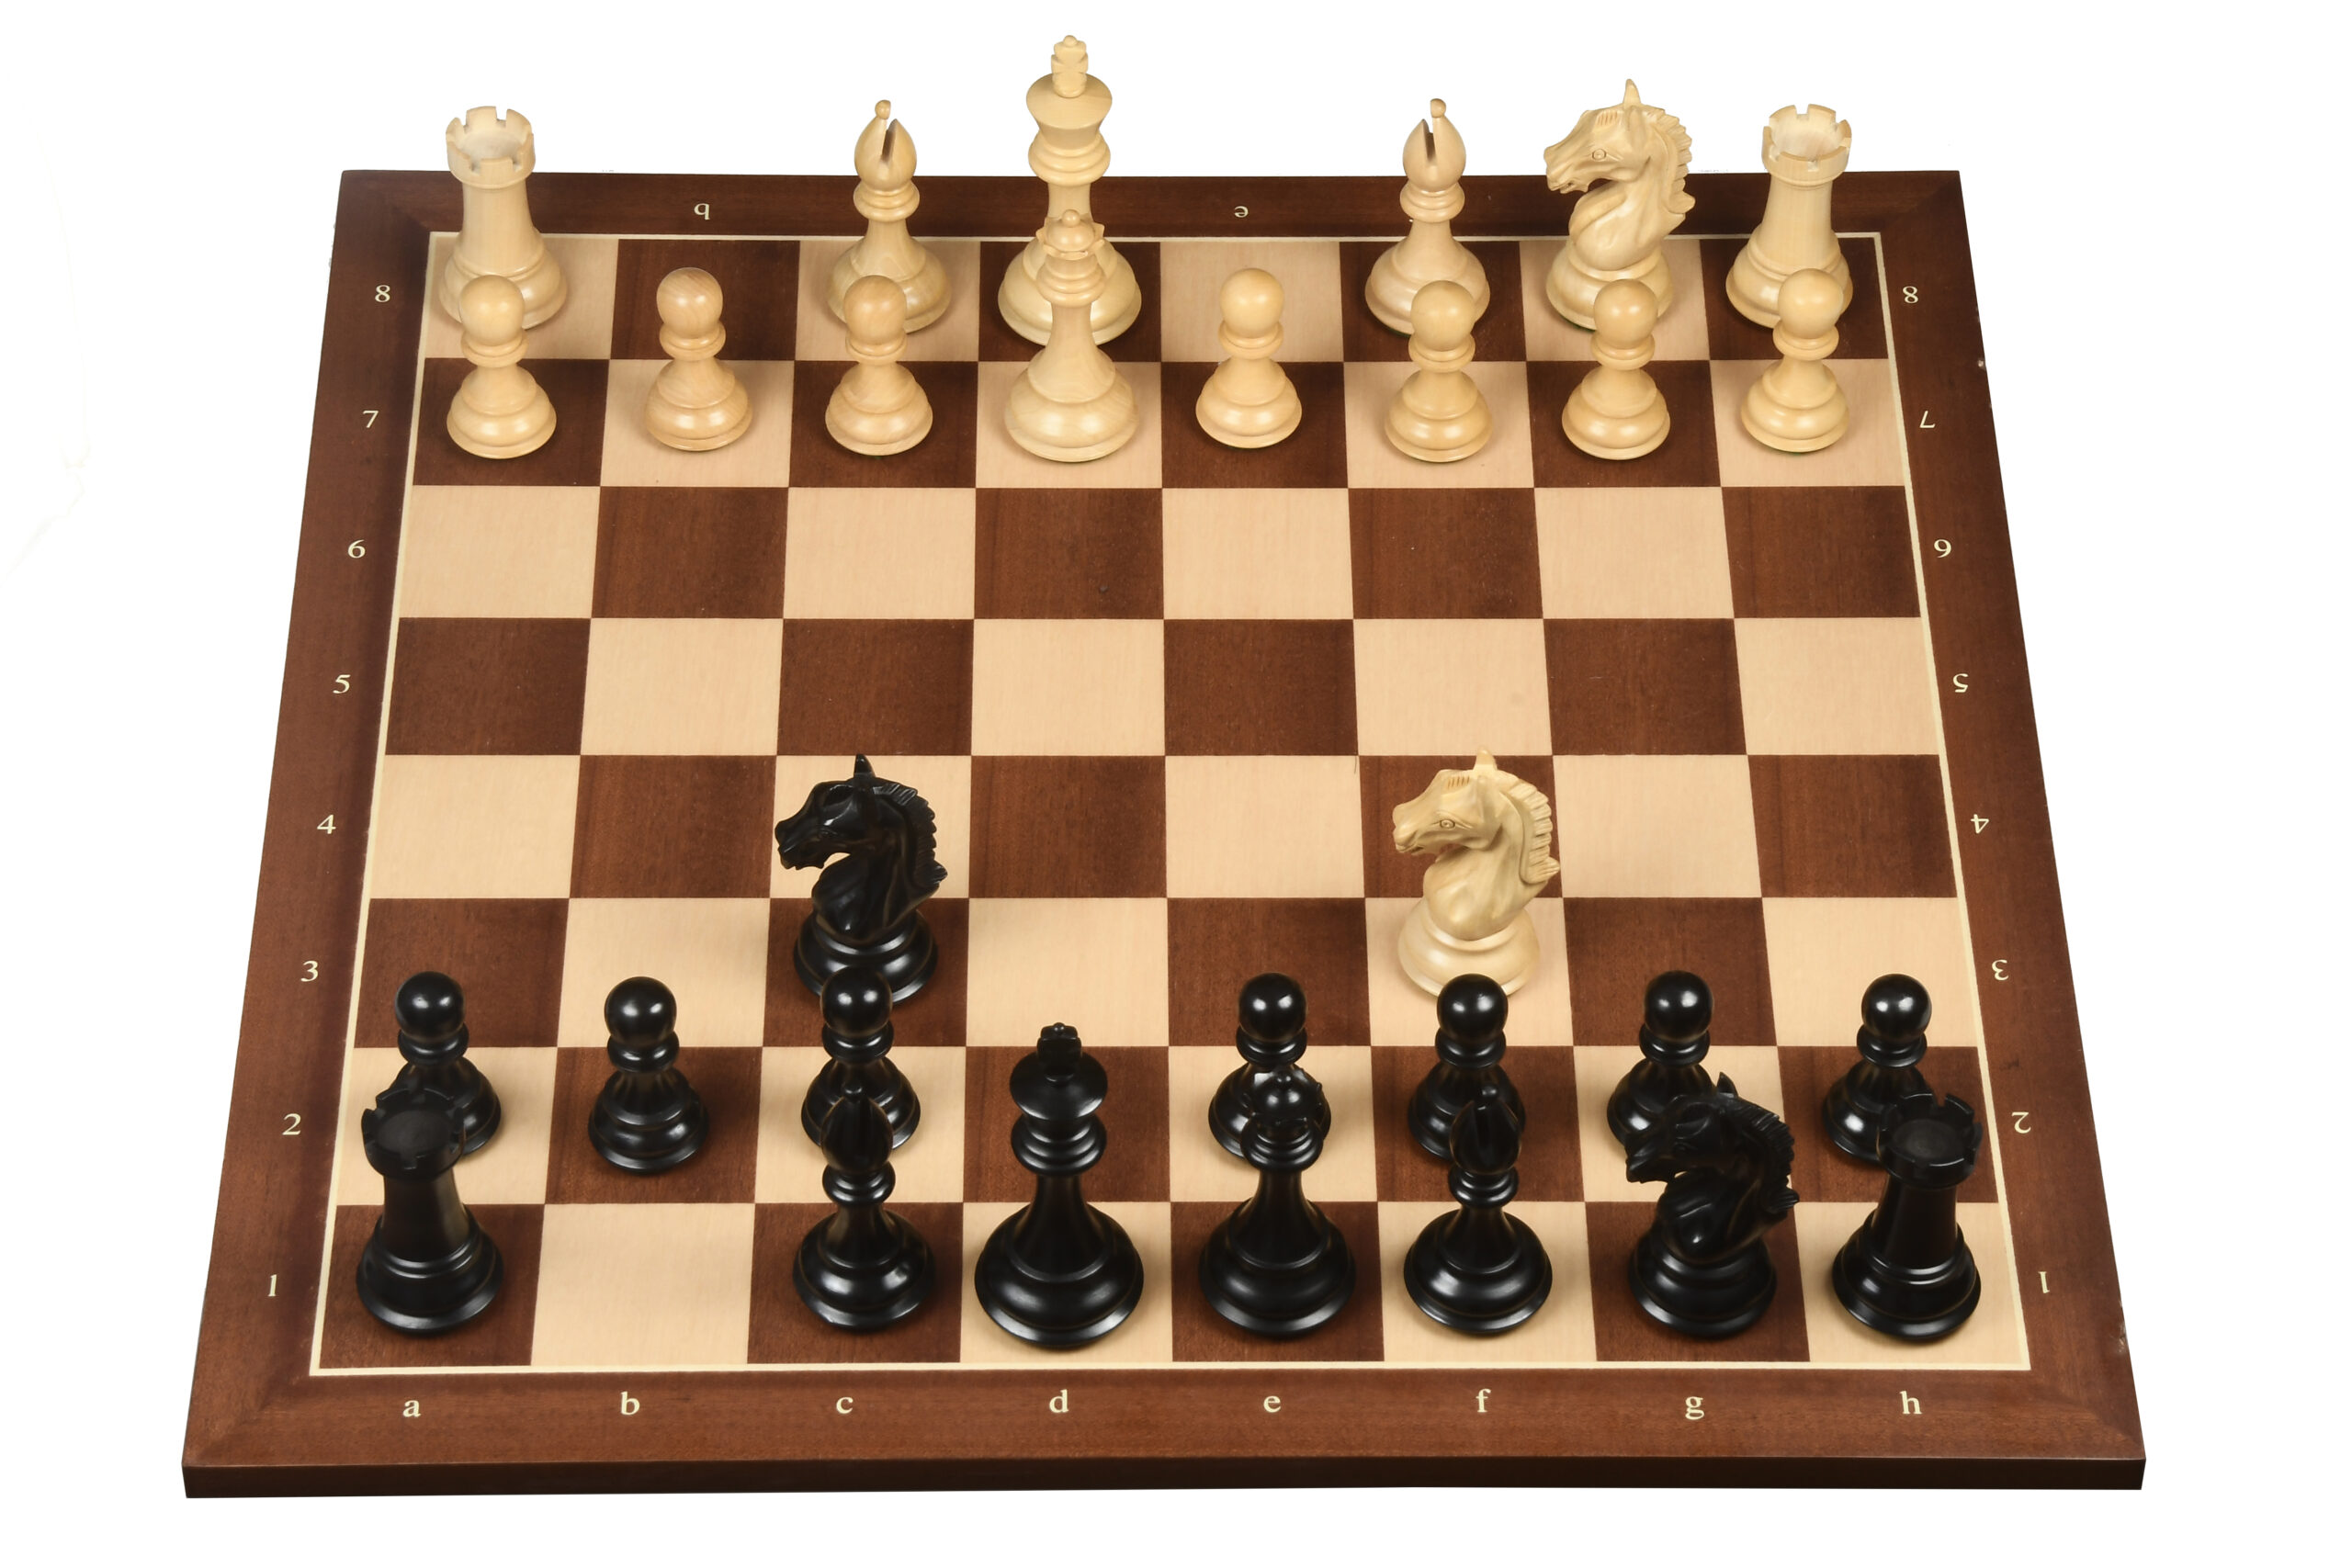 Basic Chess Problem #1 – Easy Chess Tips